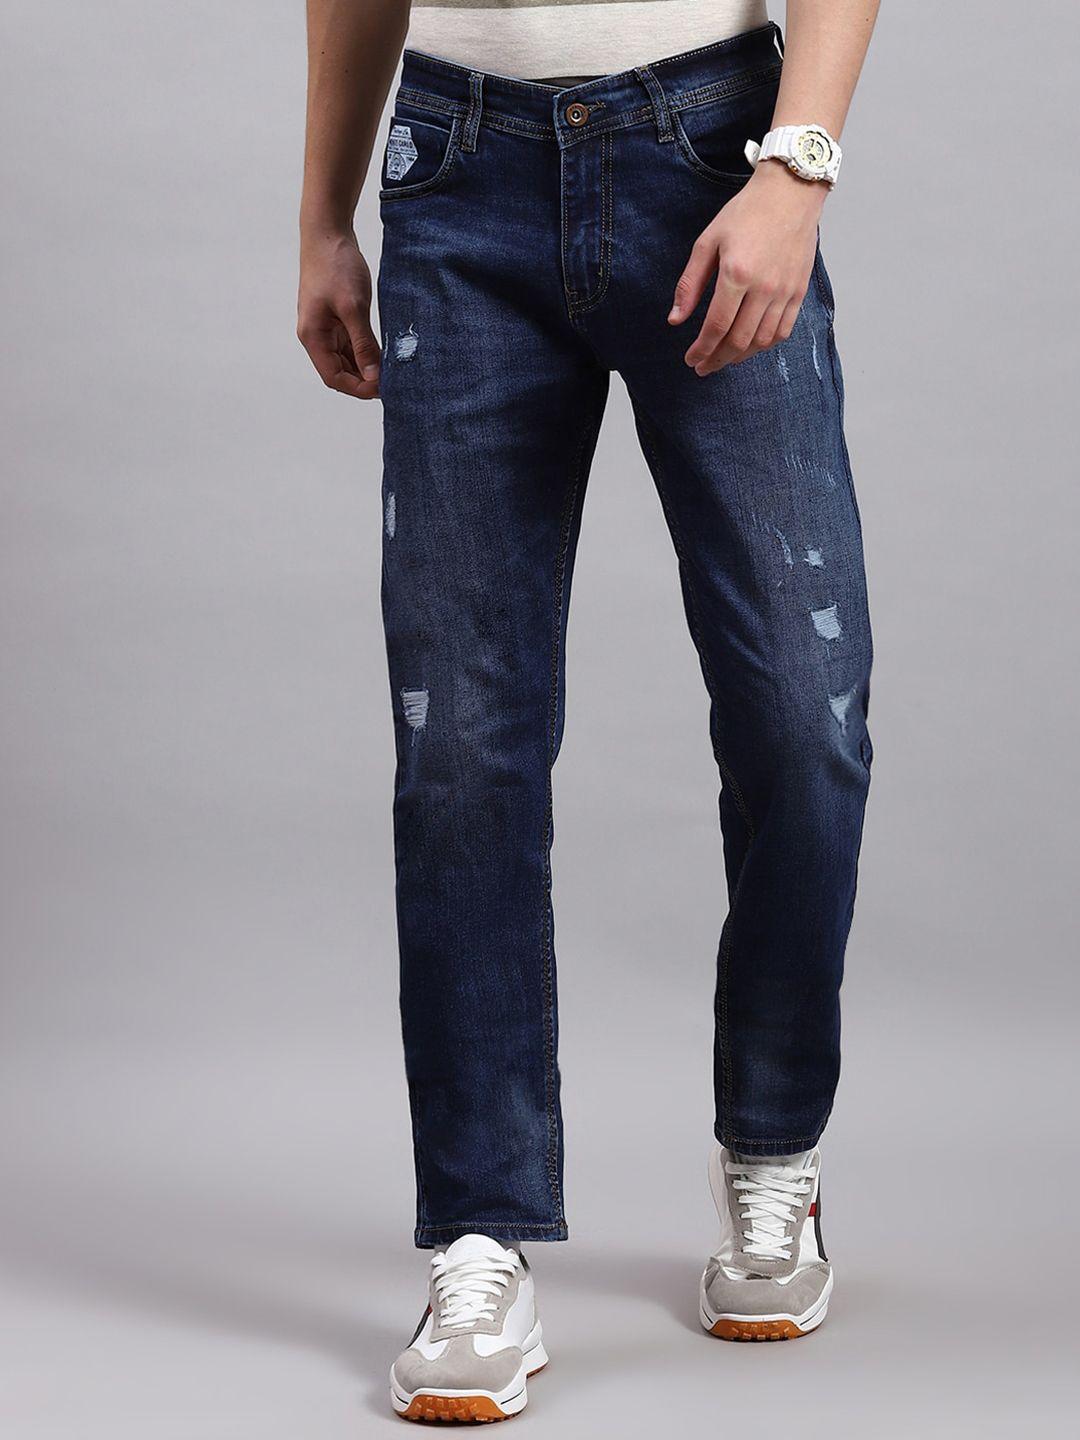 monte carlo men slim fit mildly distressed light fade jeans